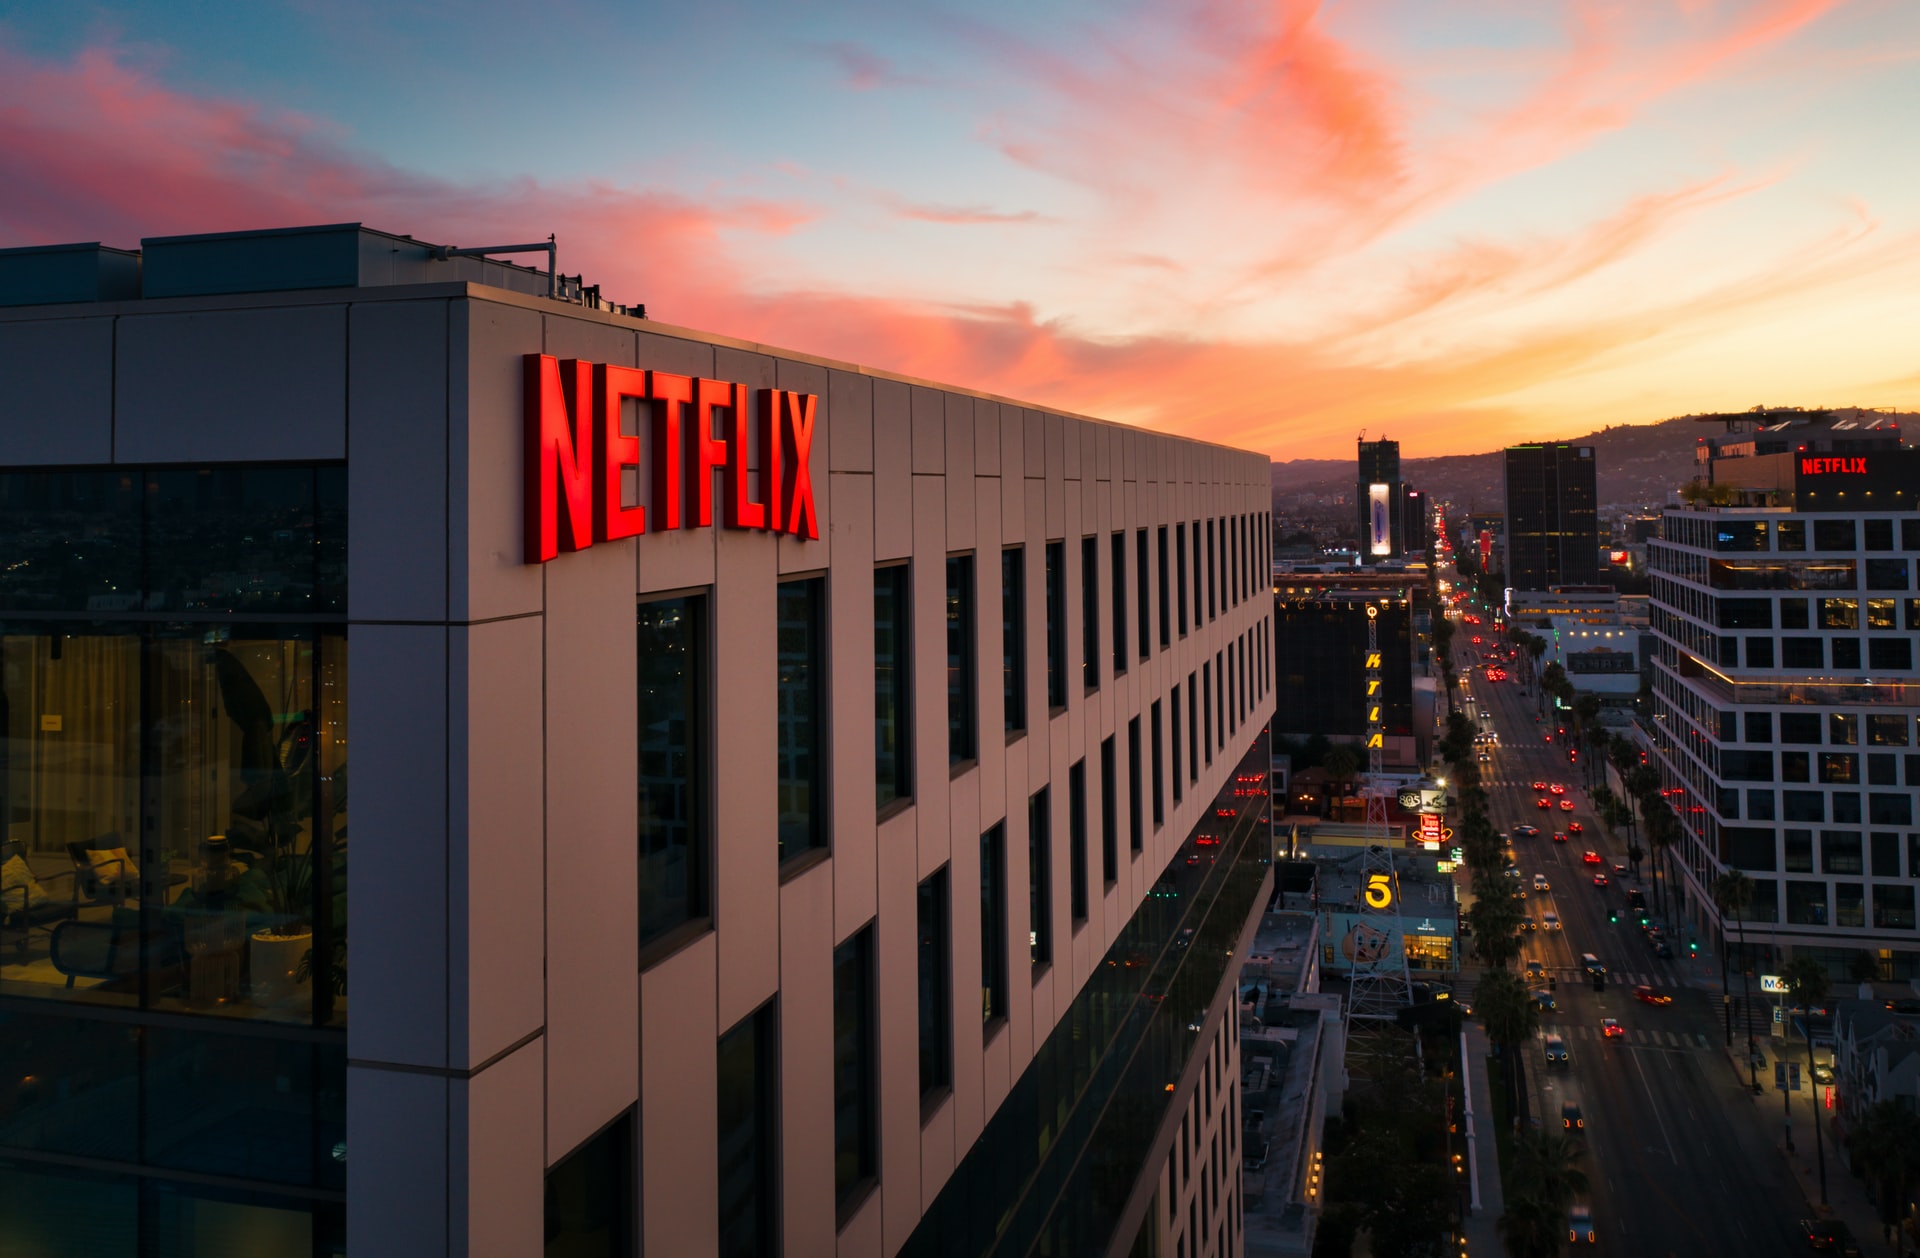 Netflix building in Los Angeles